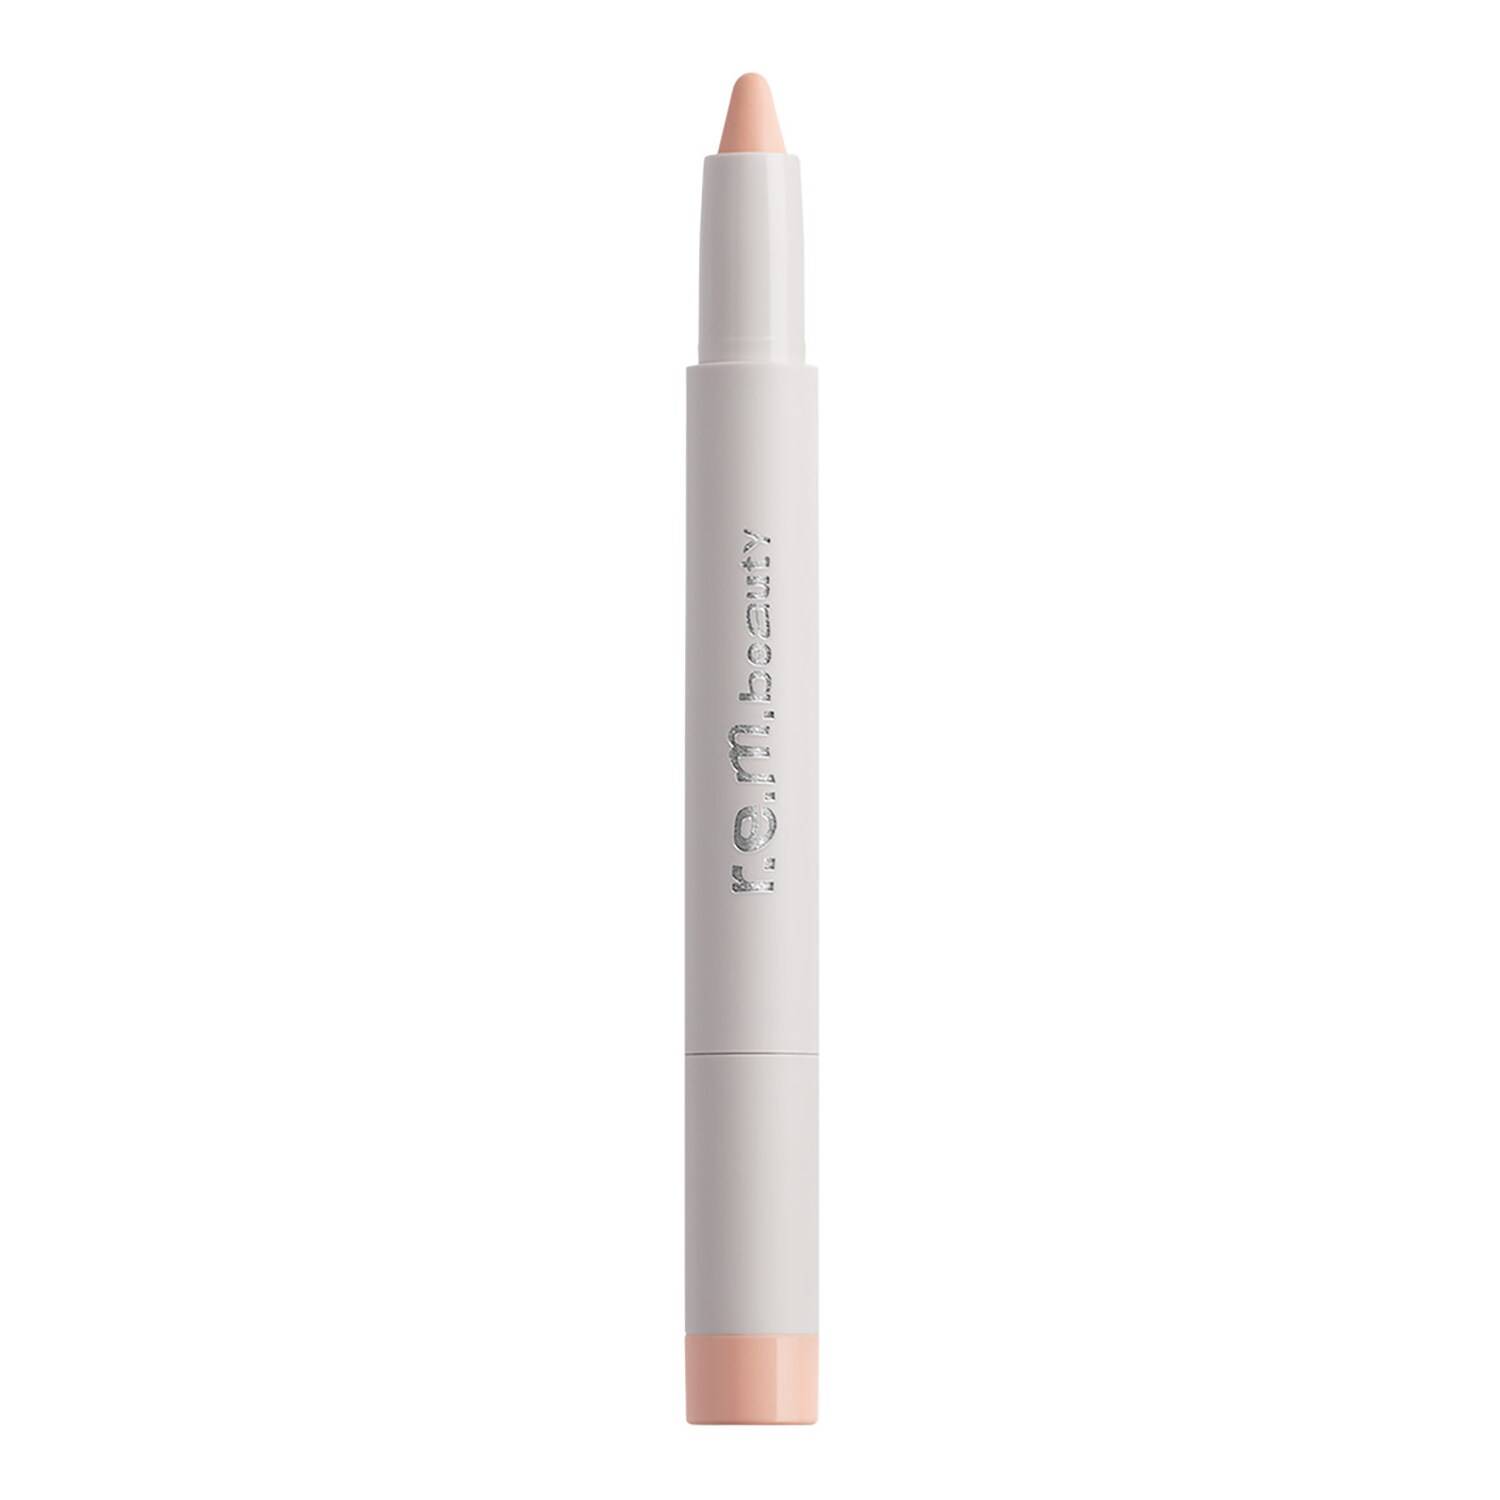 Rem Beauty Midnight Shadows Multi-Use Eye Stick 0.8G Intergalactic Pink Nude Cream 0.8G